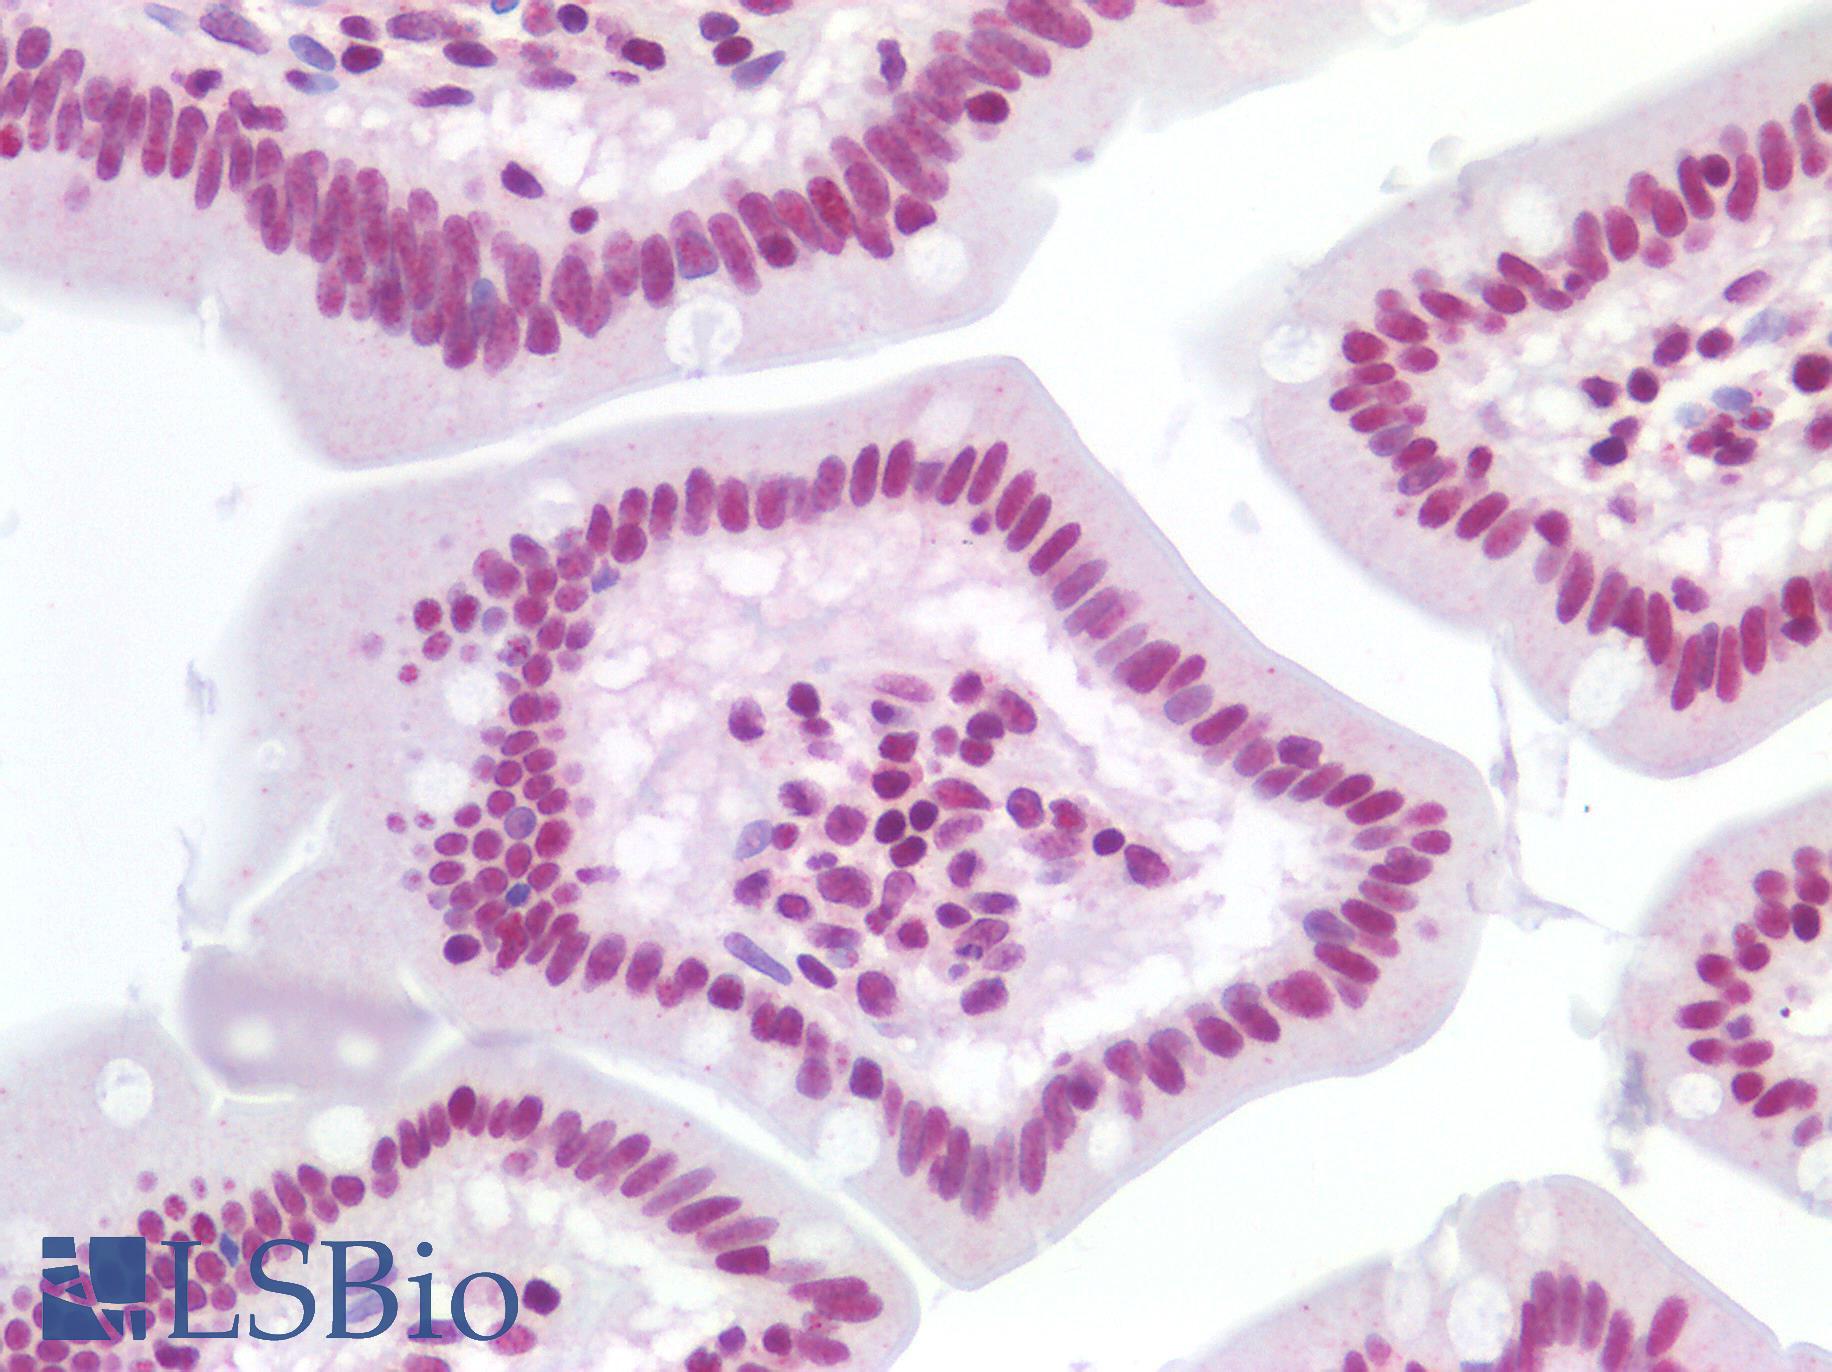 TERT / Telomerase Antibody - Human Small Intestine: Formalin-Fixed, Paraffin-Embedded (FFPE)